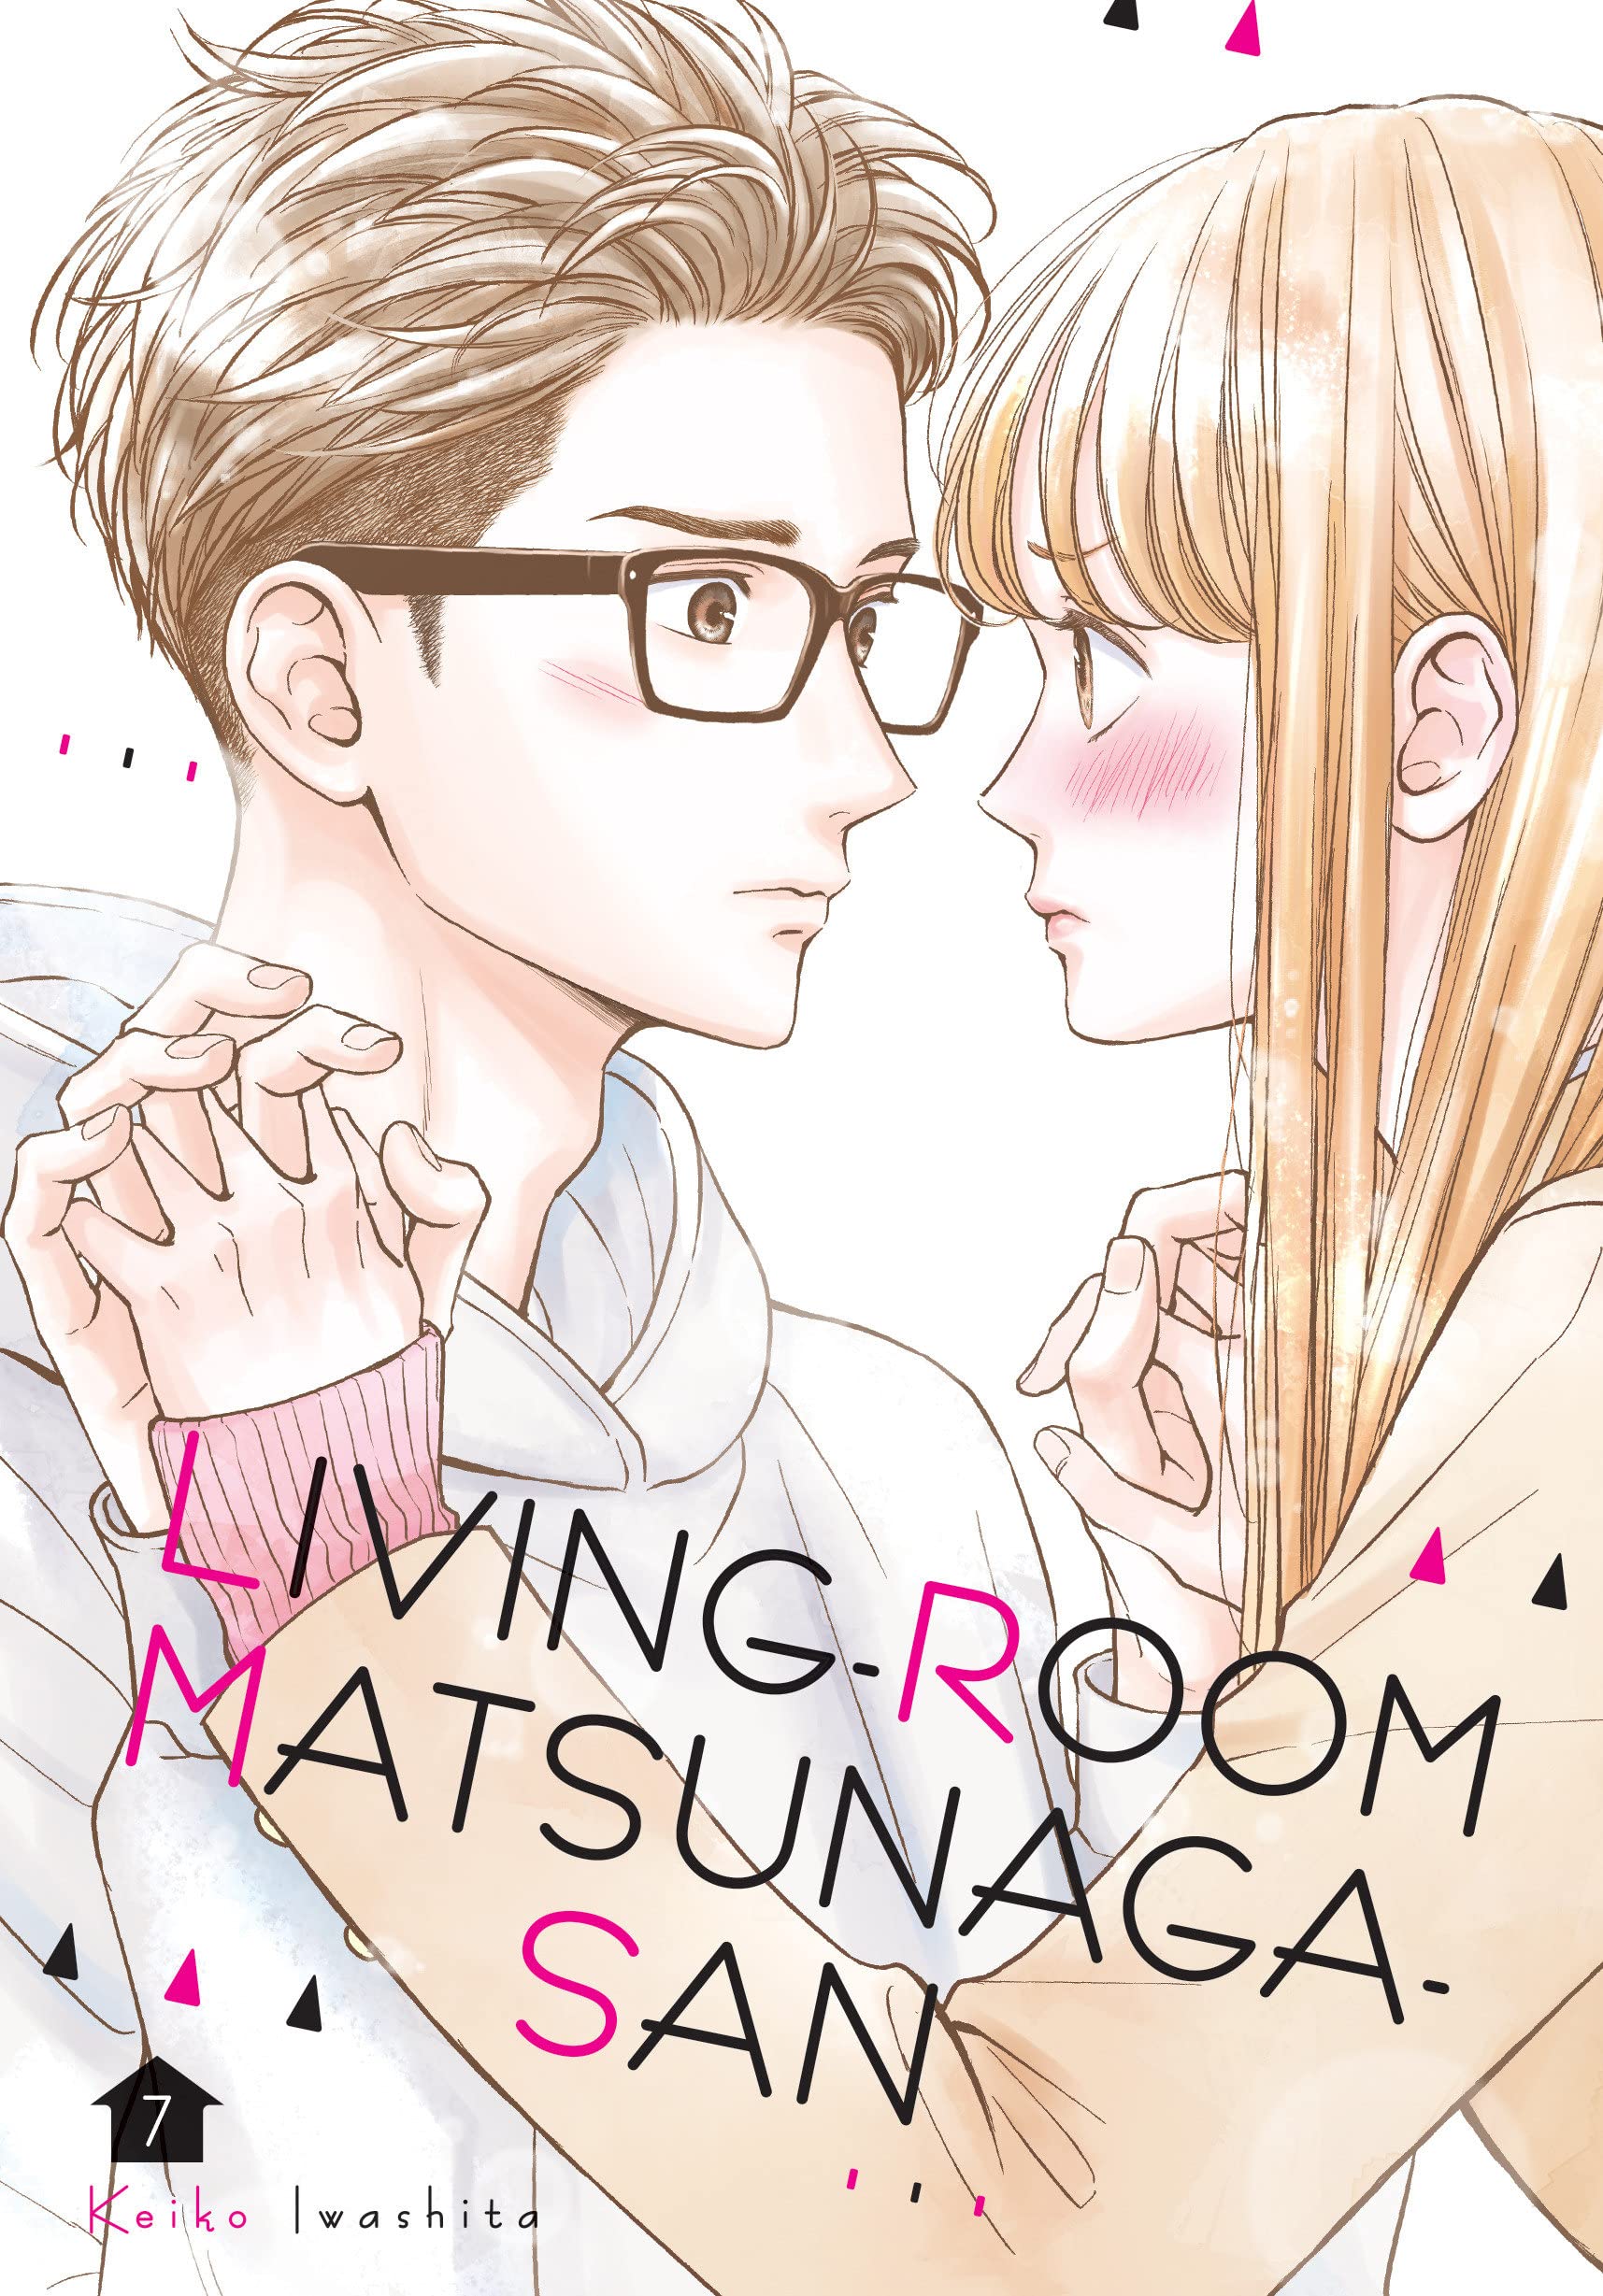 Living-Room Matsunaga-san - Volume 7